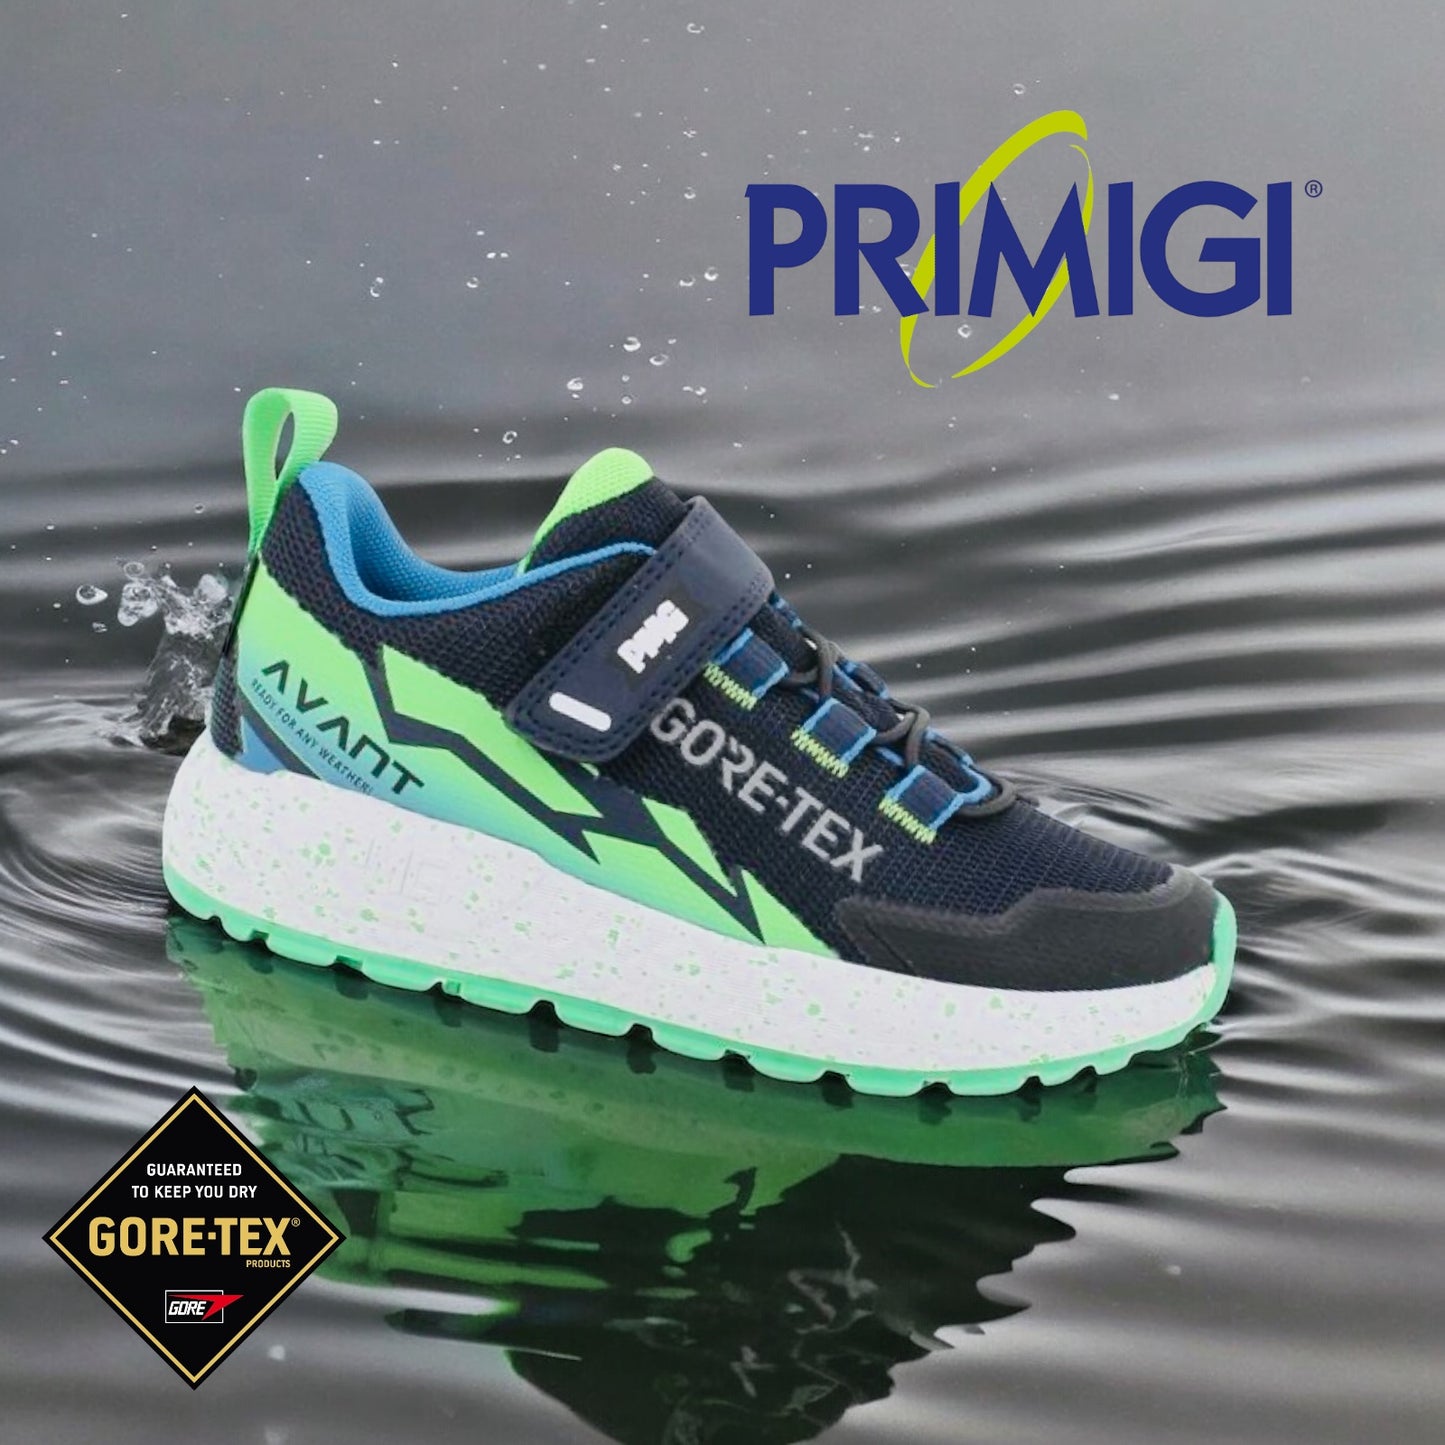 Primigi goretex trainer navy lime waterproof